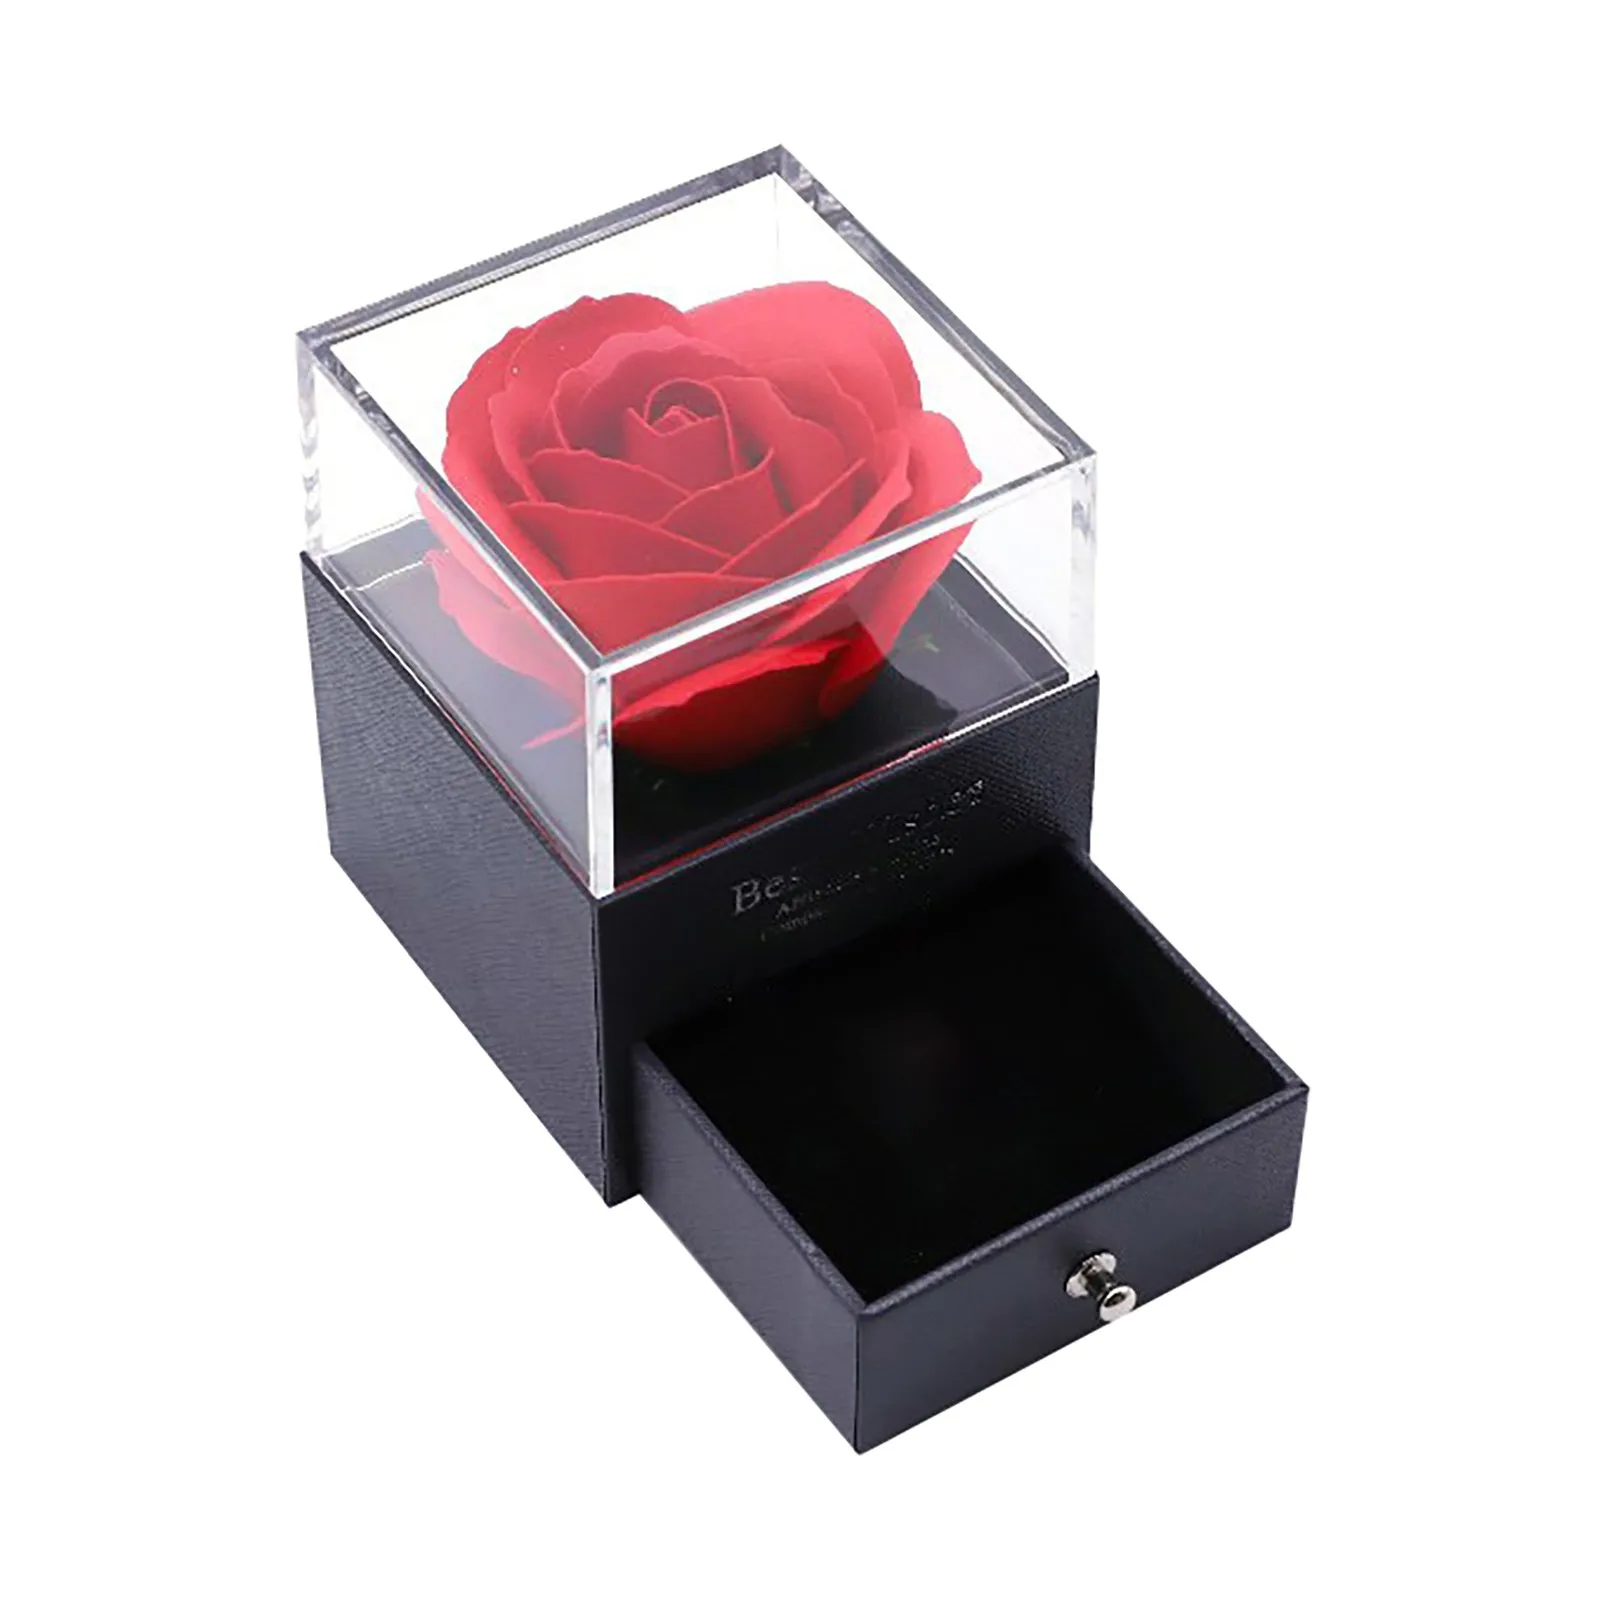 S36492754eea743559fc1b7bb59856206n Everlasting Flower Gift Box Rose Preservation Box Mother's Day Handmade Rose Gif